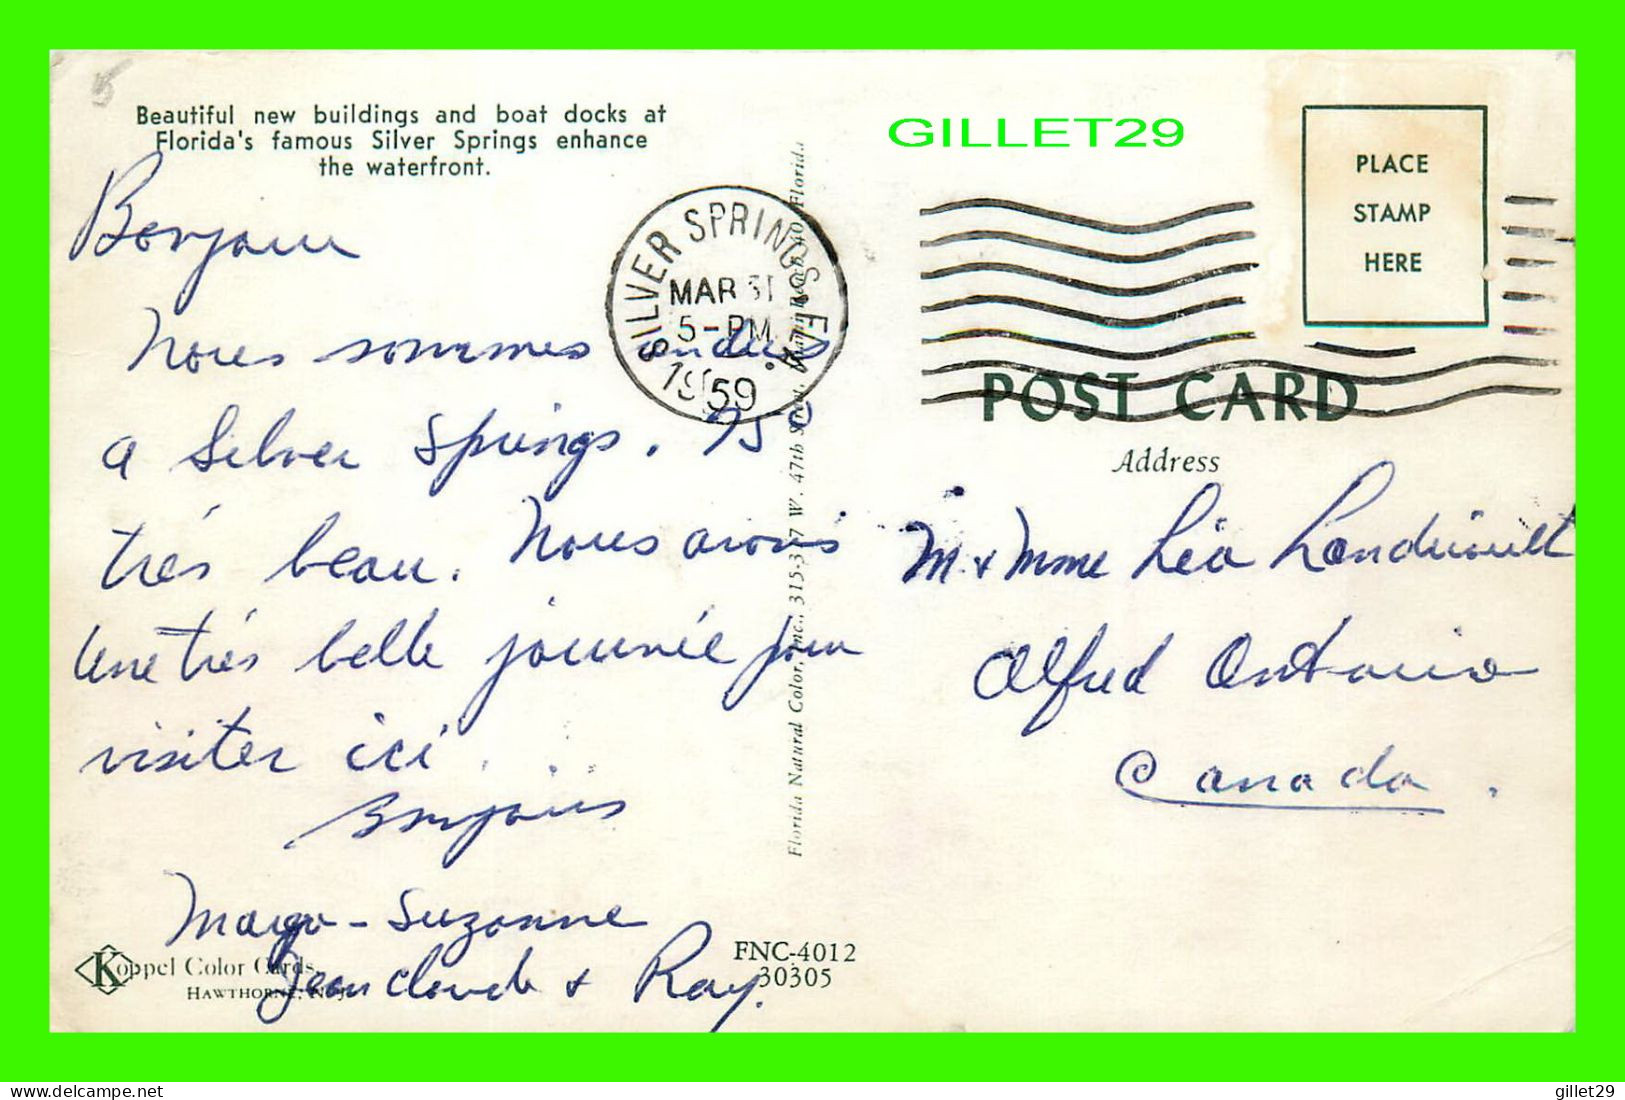 SIVER SPRINGS, FL -  BOAT DOCKS - TRAVEL IN 1959 - KOPPEL COLOR CARDS - JUNGLE CRUISE - - Silver Springs